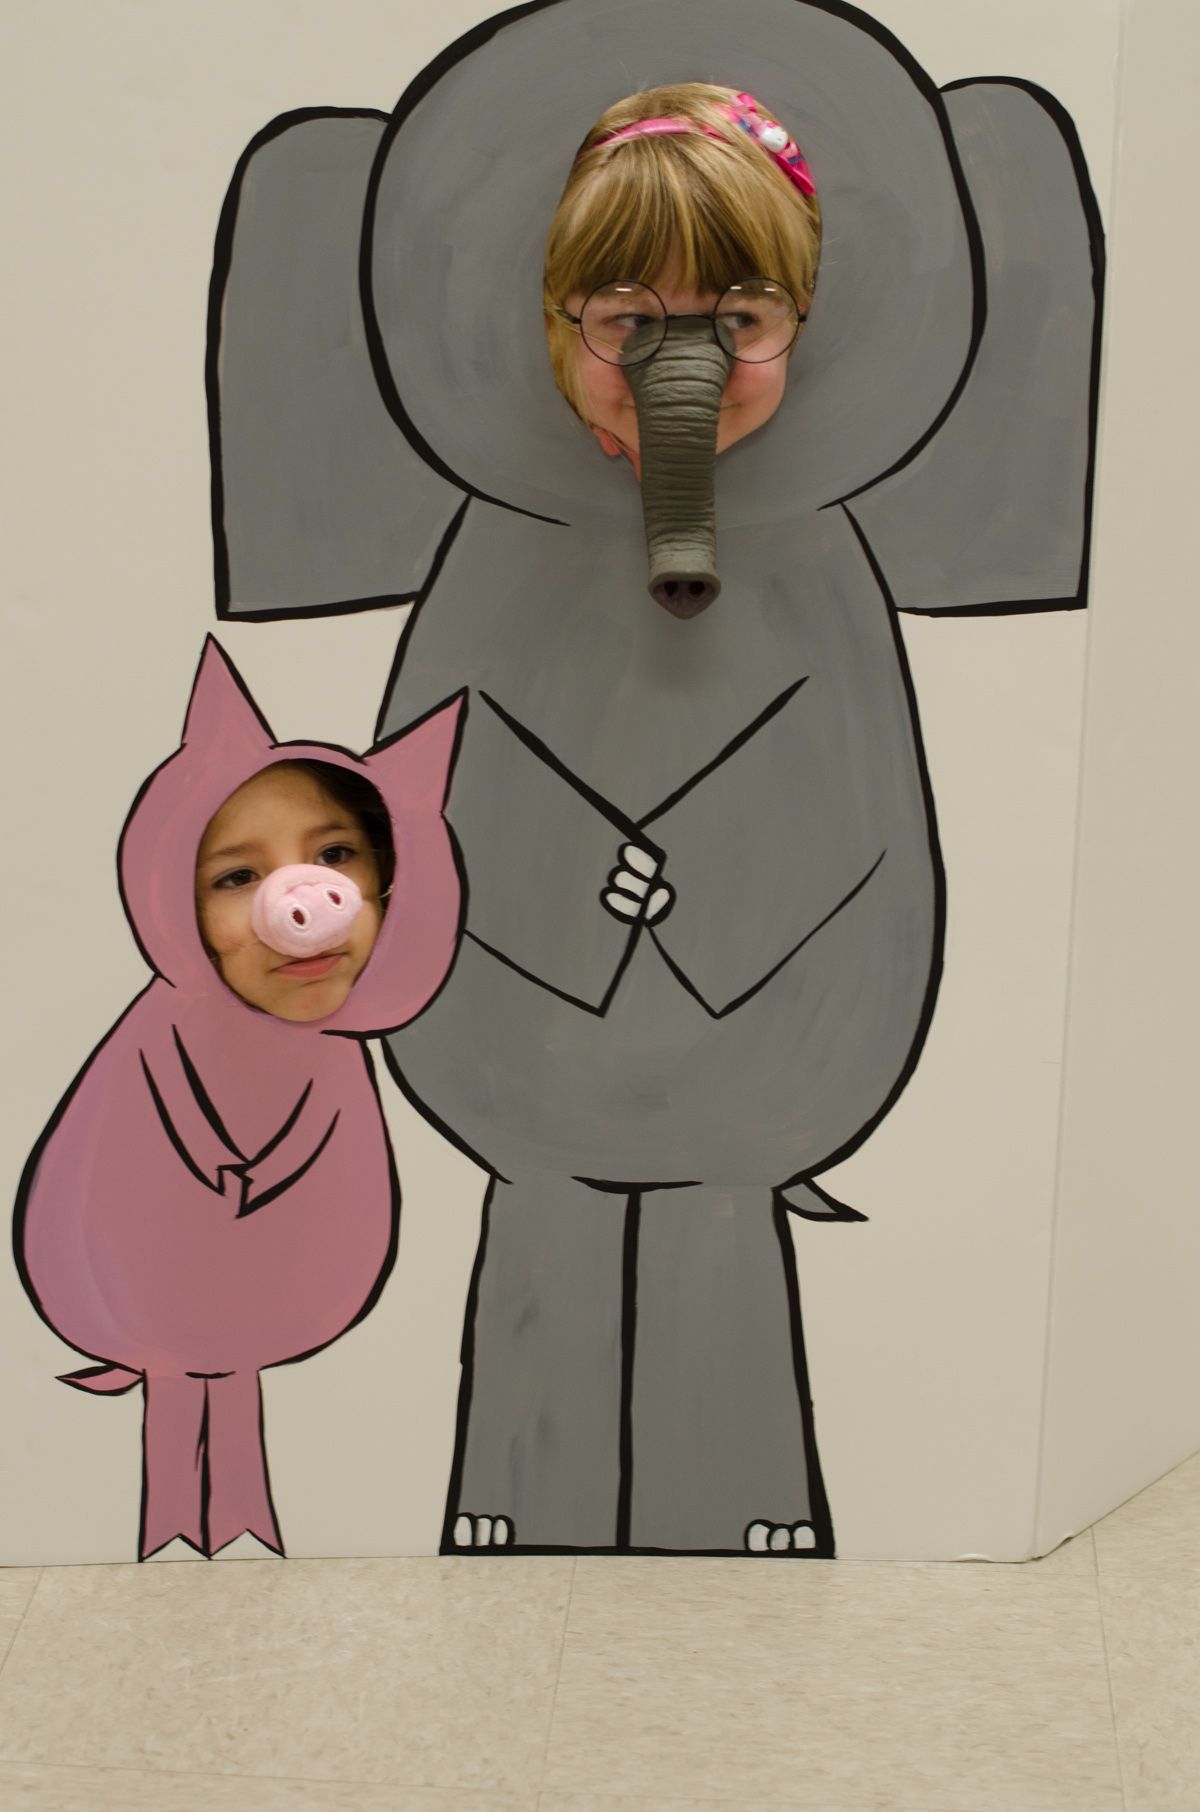 Elephant and Piggie cutout